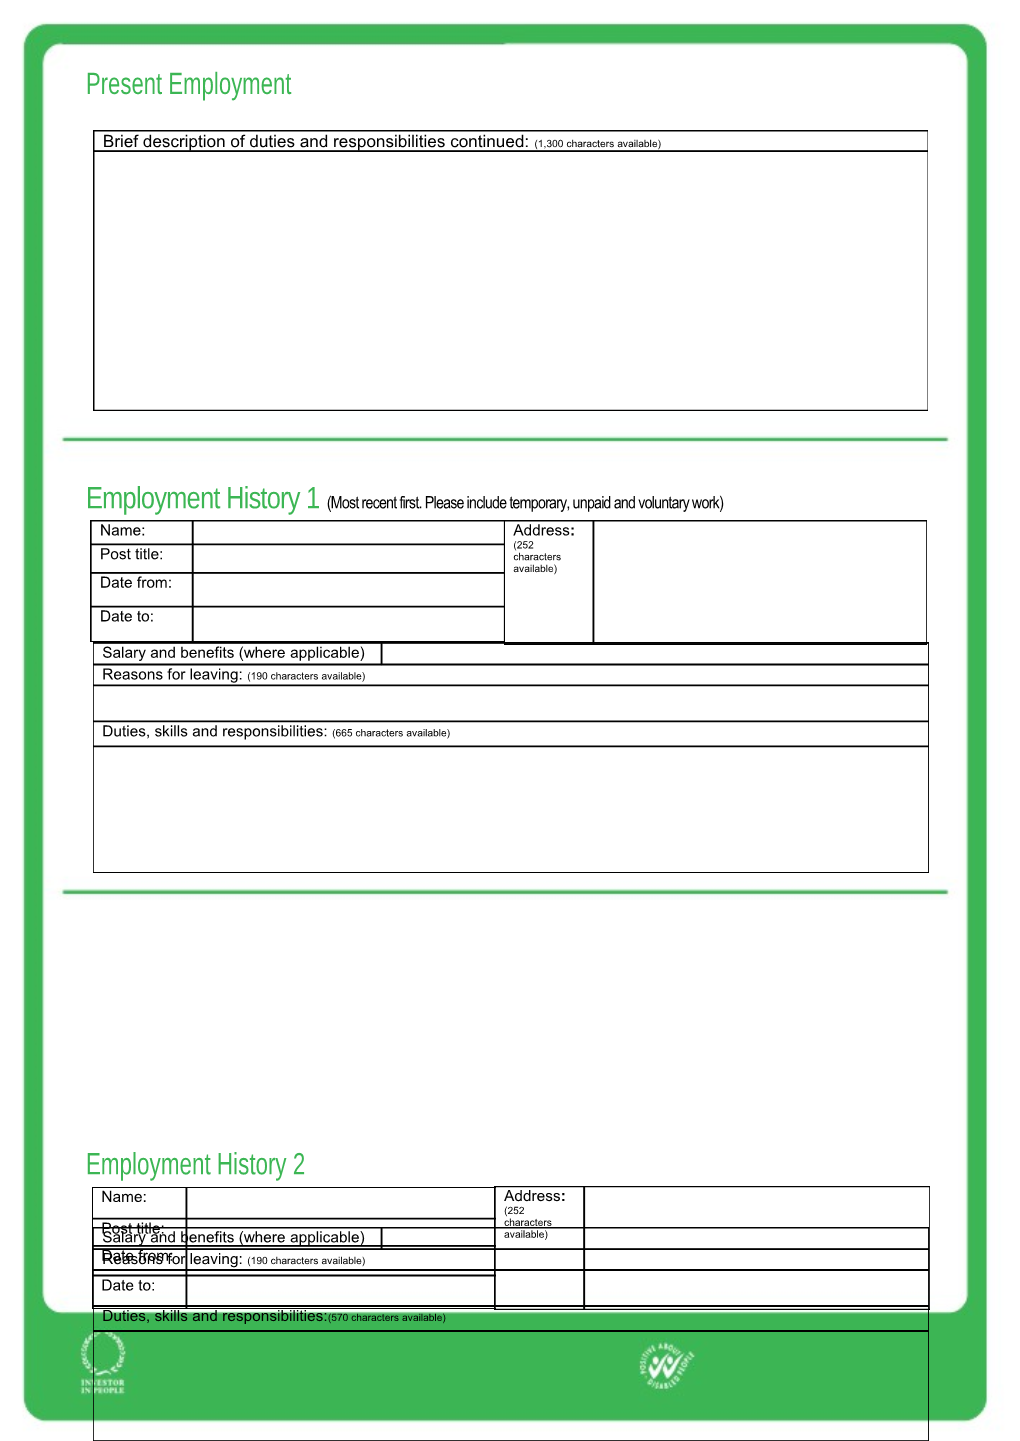 The Borough of Oadby & Wigston Application Form